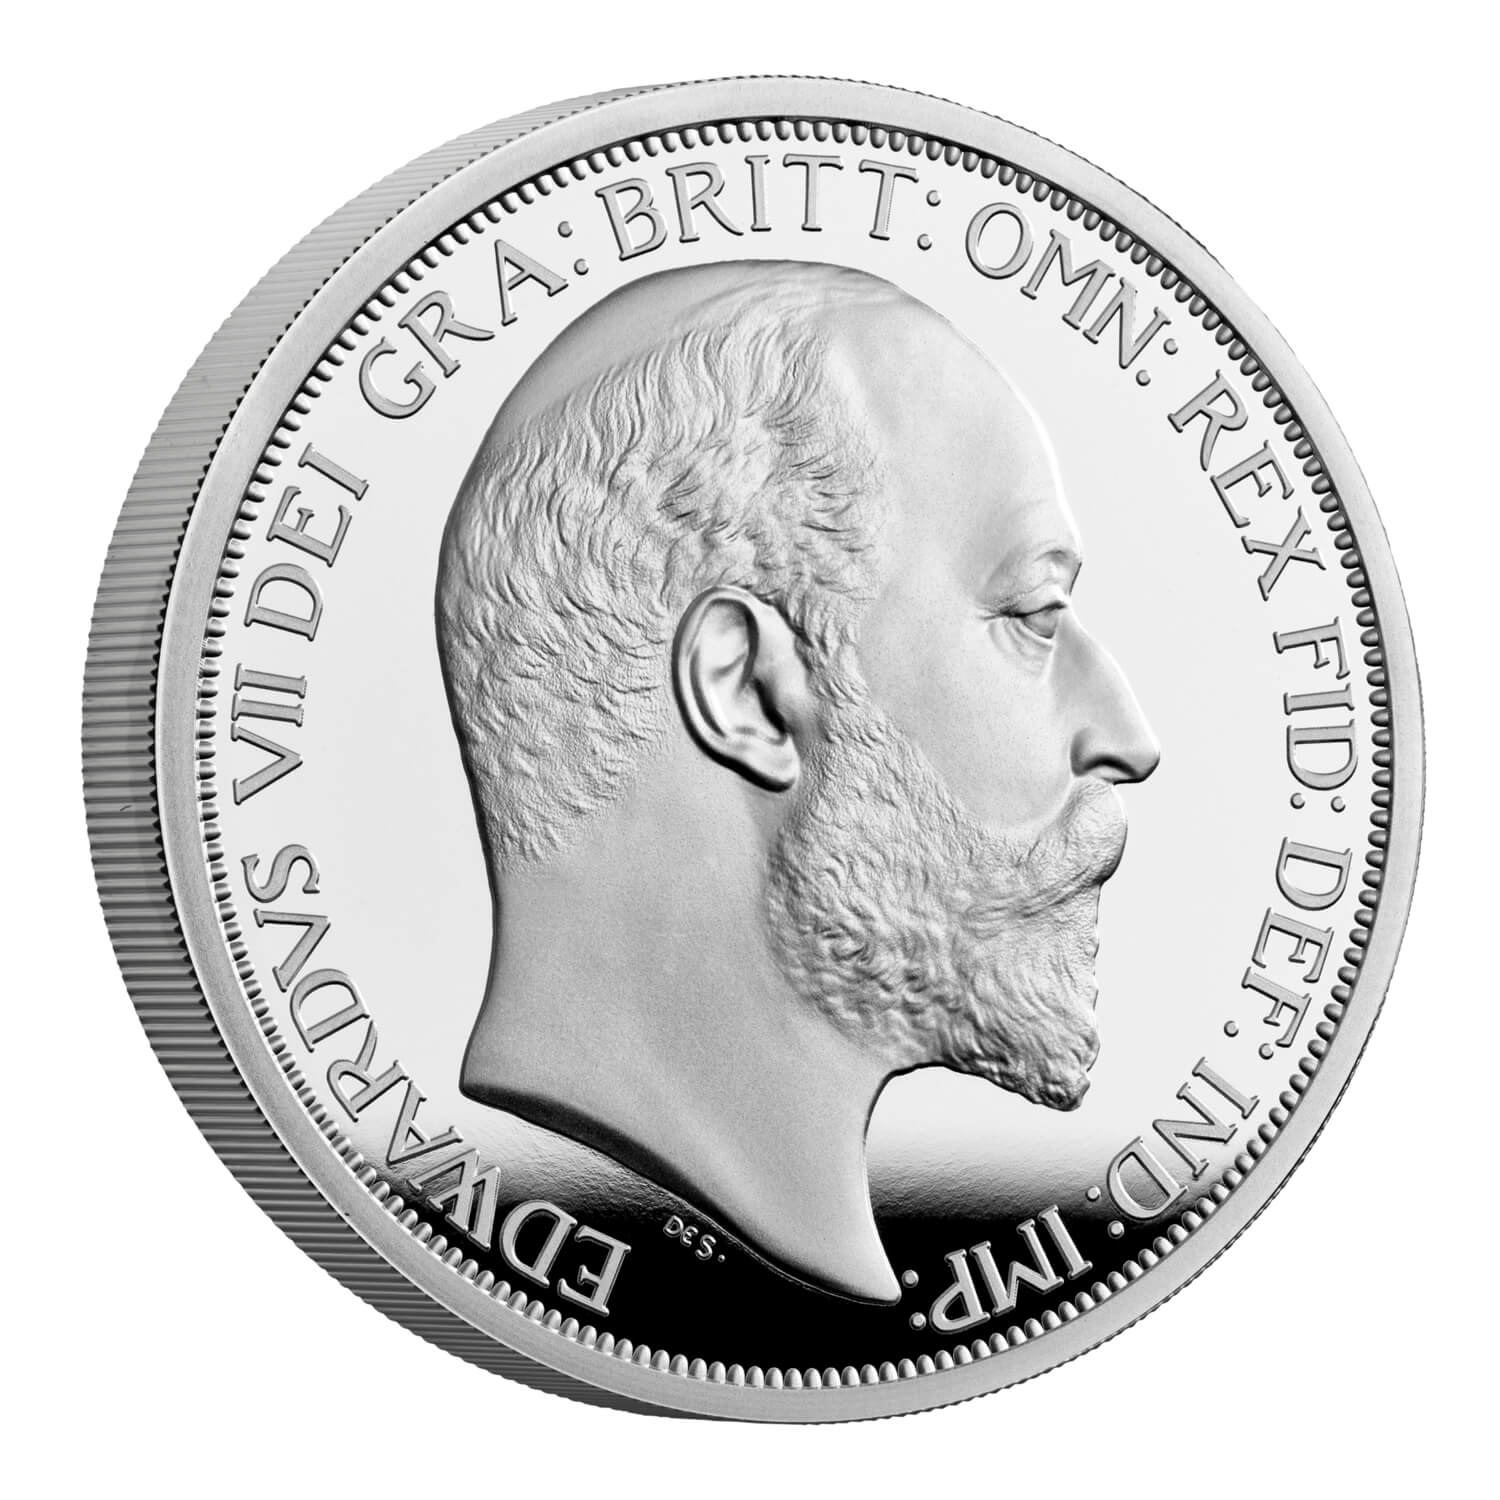 (W185.2.P.2022.UK22E7S1O) 2 Pounds UK 2022 1 oz Proof silver - King Edward VII Reverse (zoom)